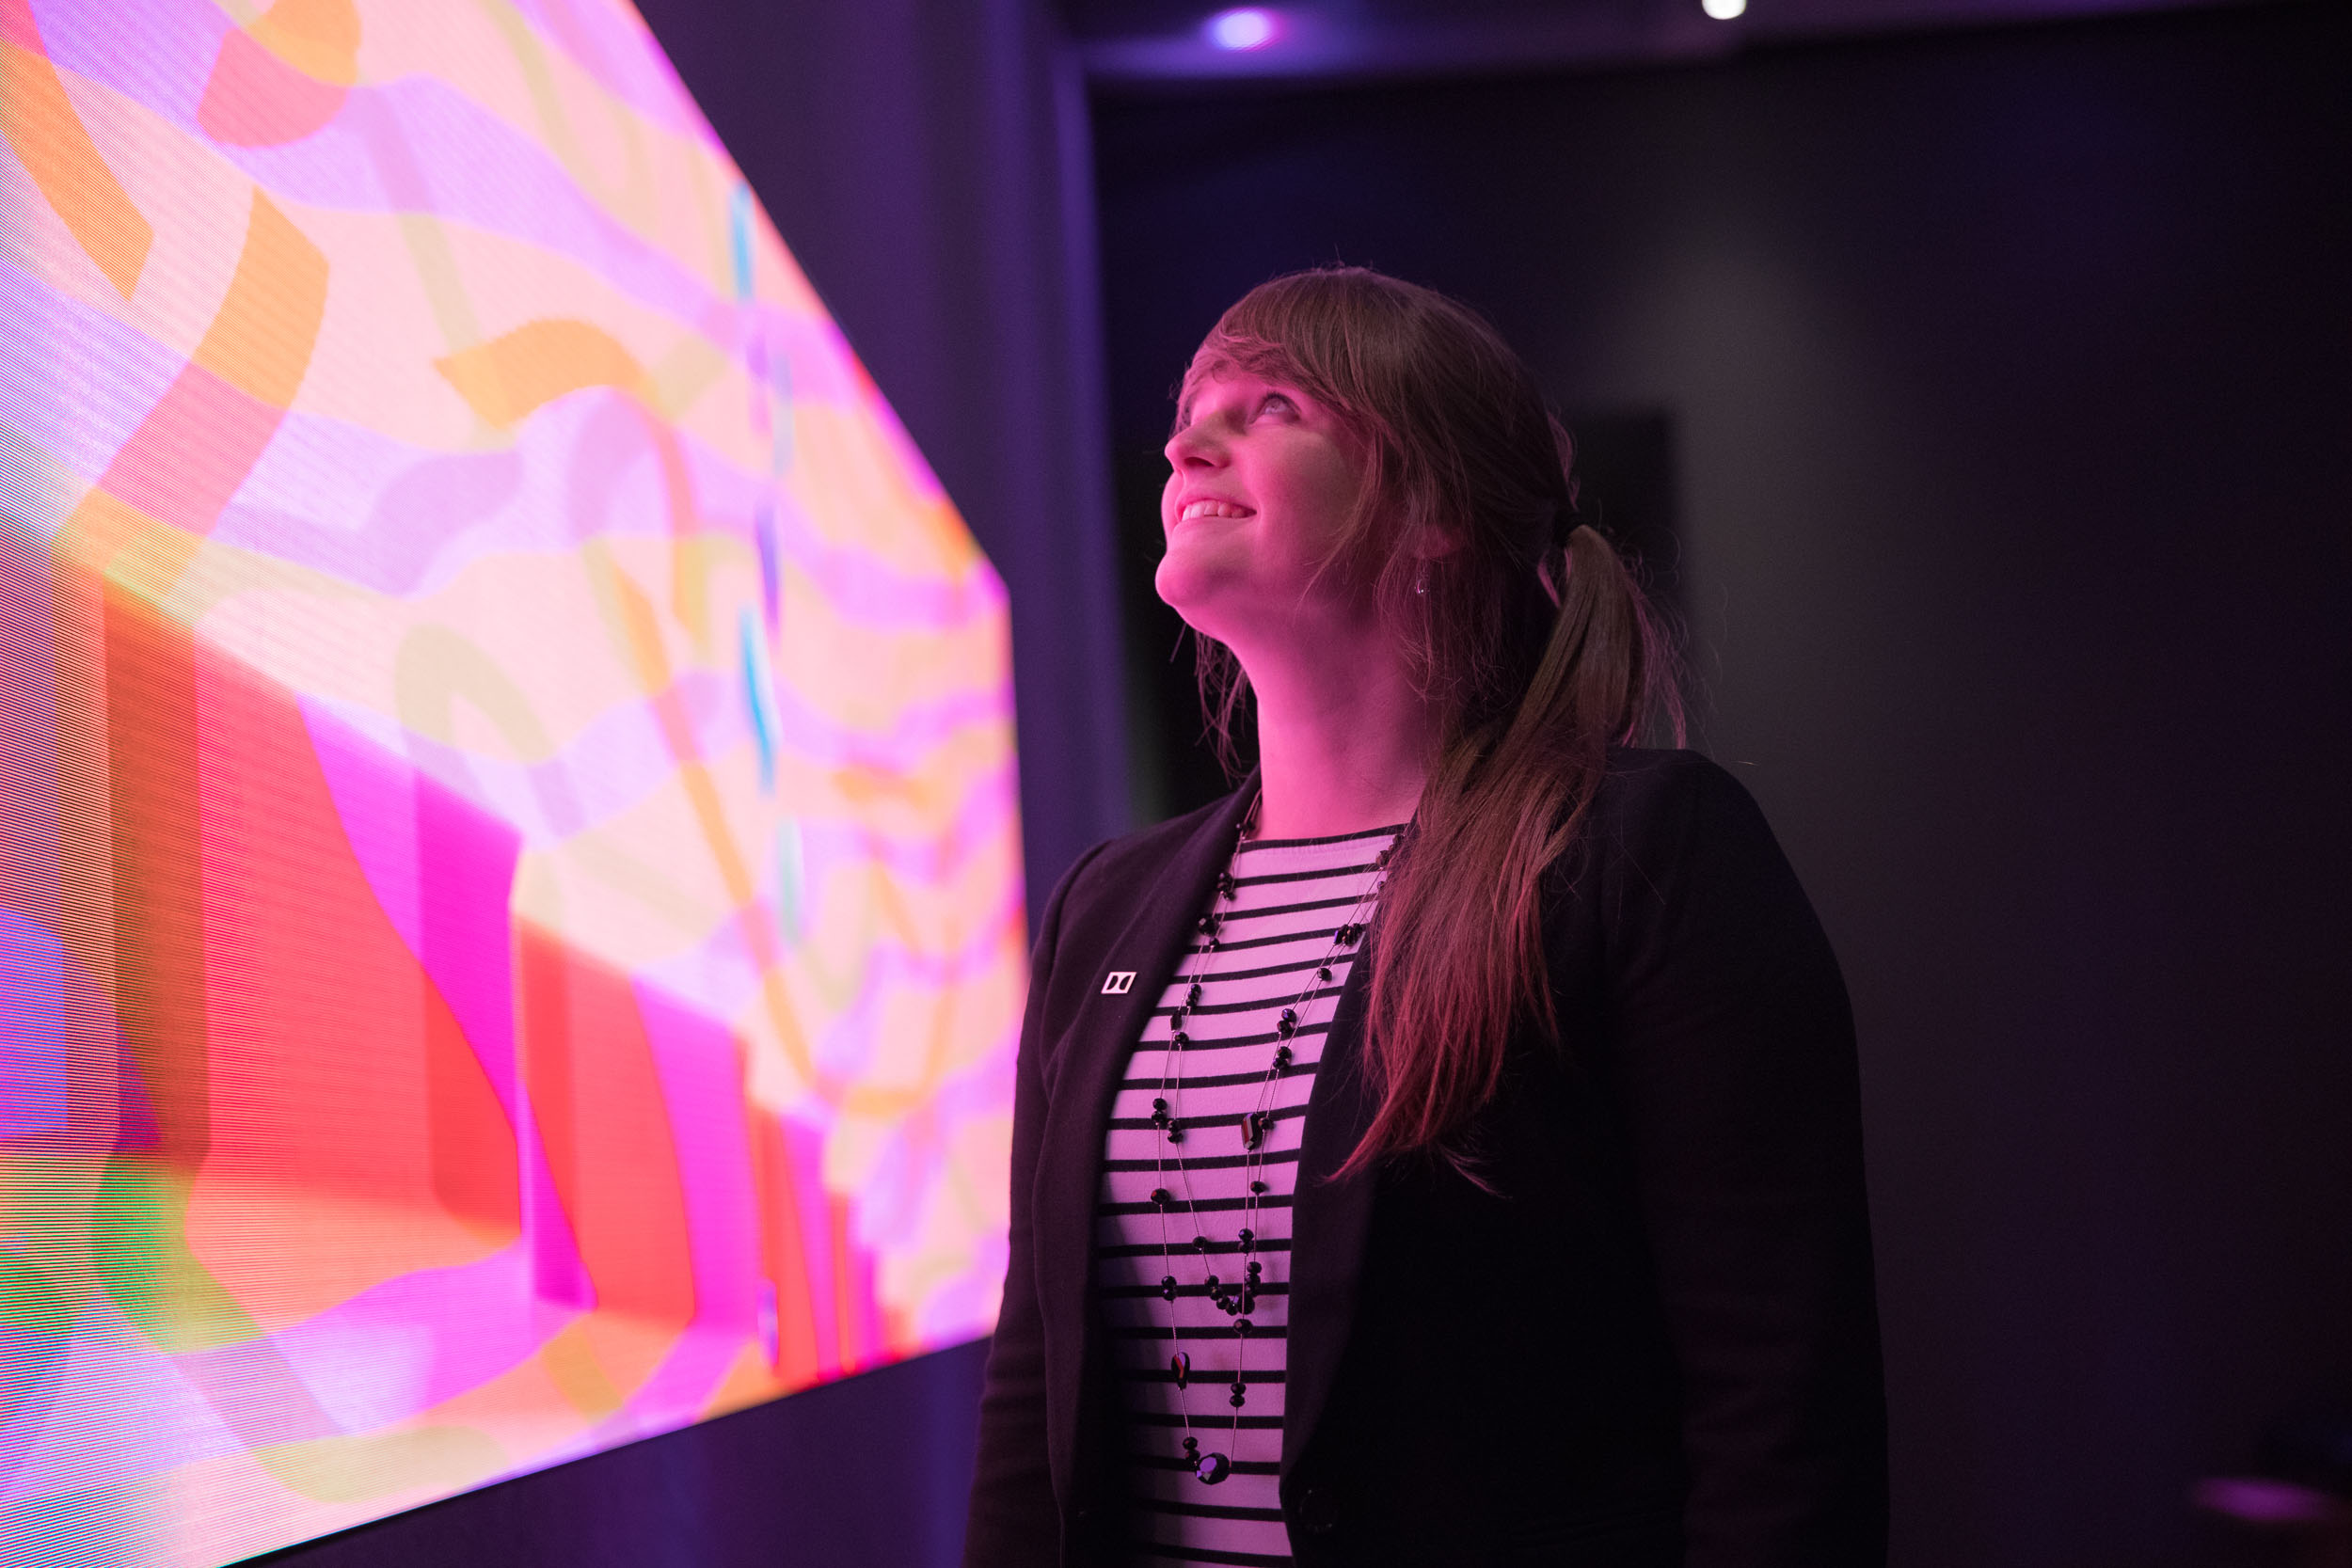 Jaclyn Pytlarz looks at a colorful, vibrant screen.